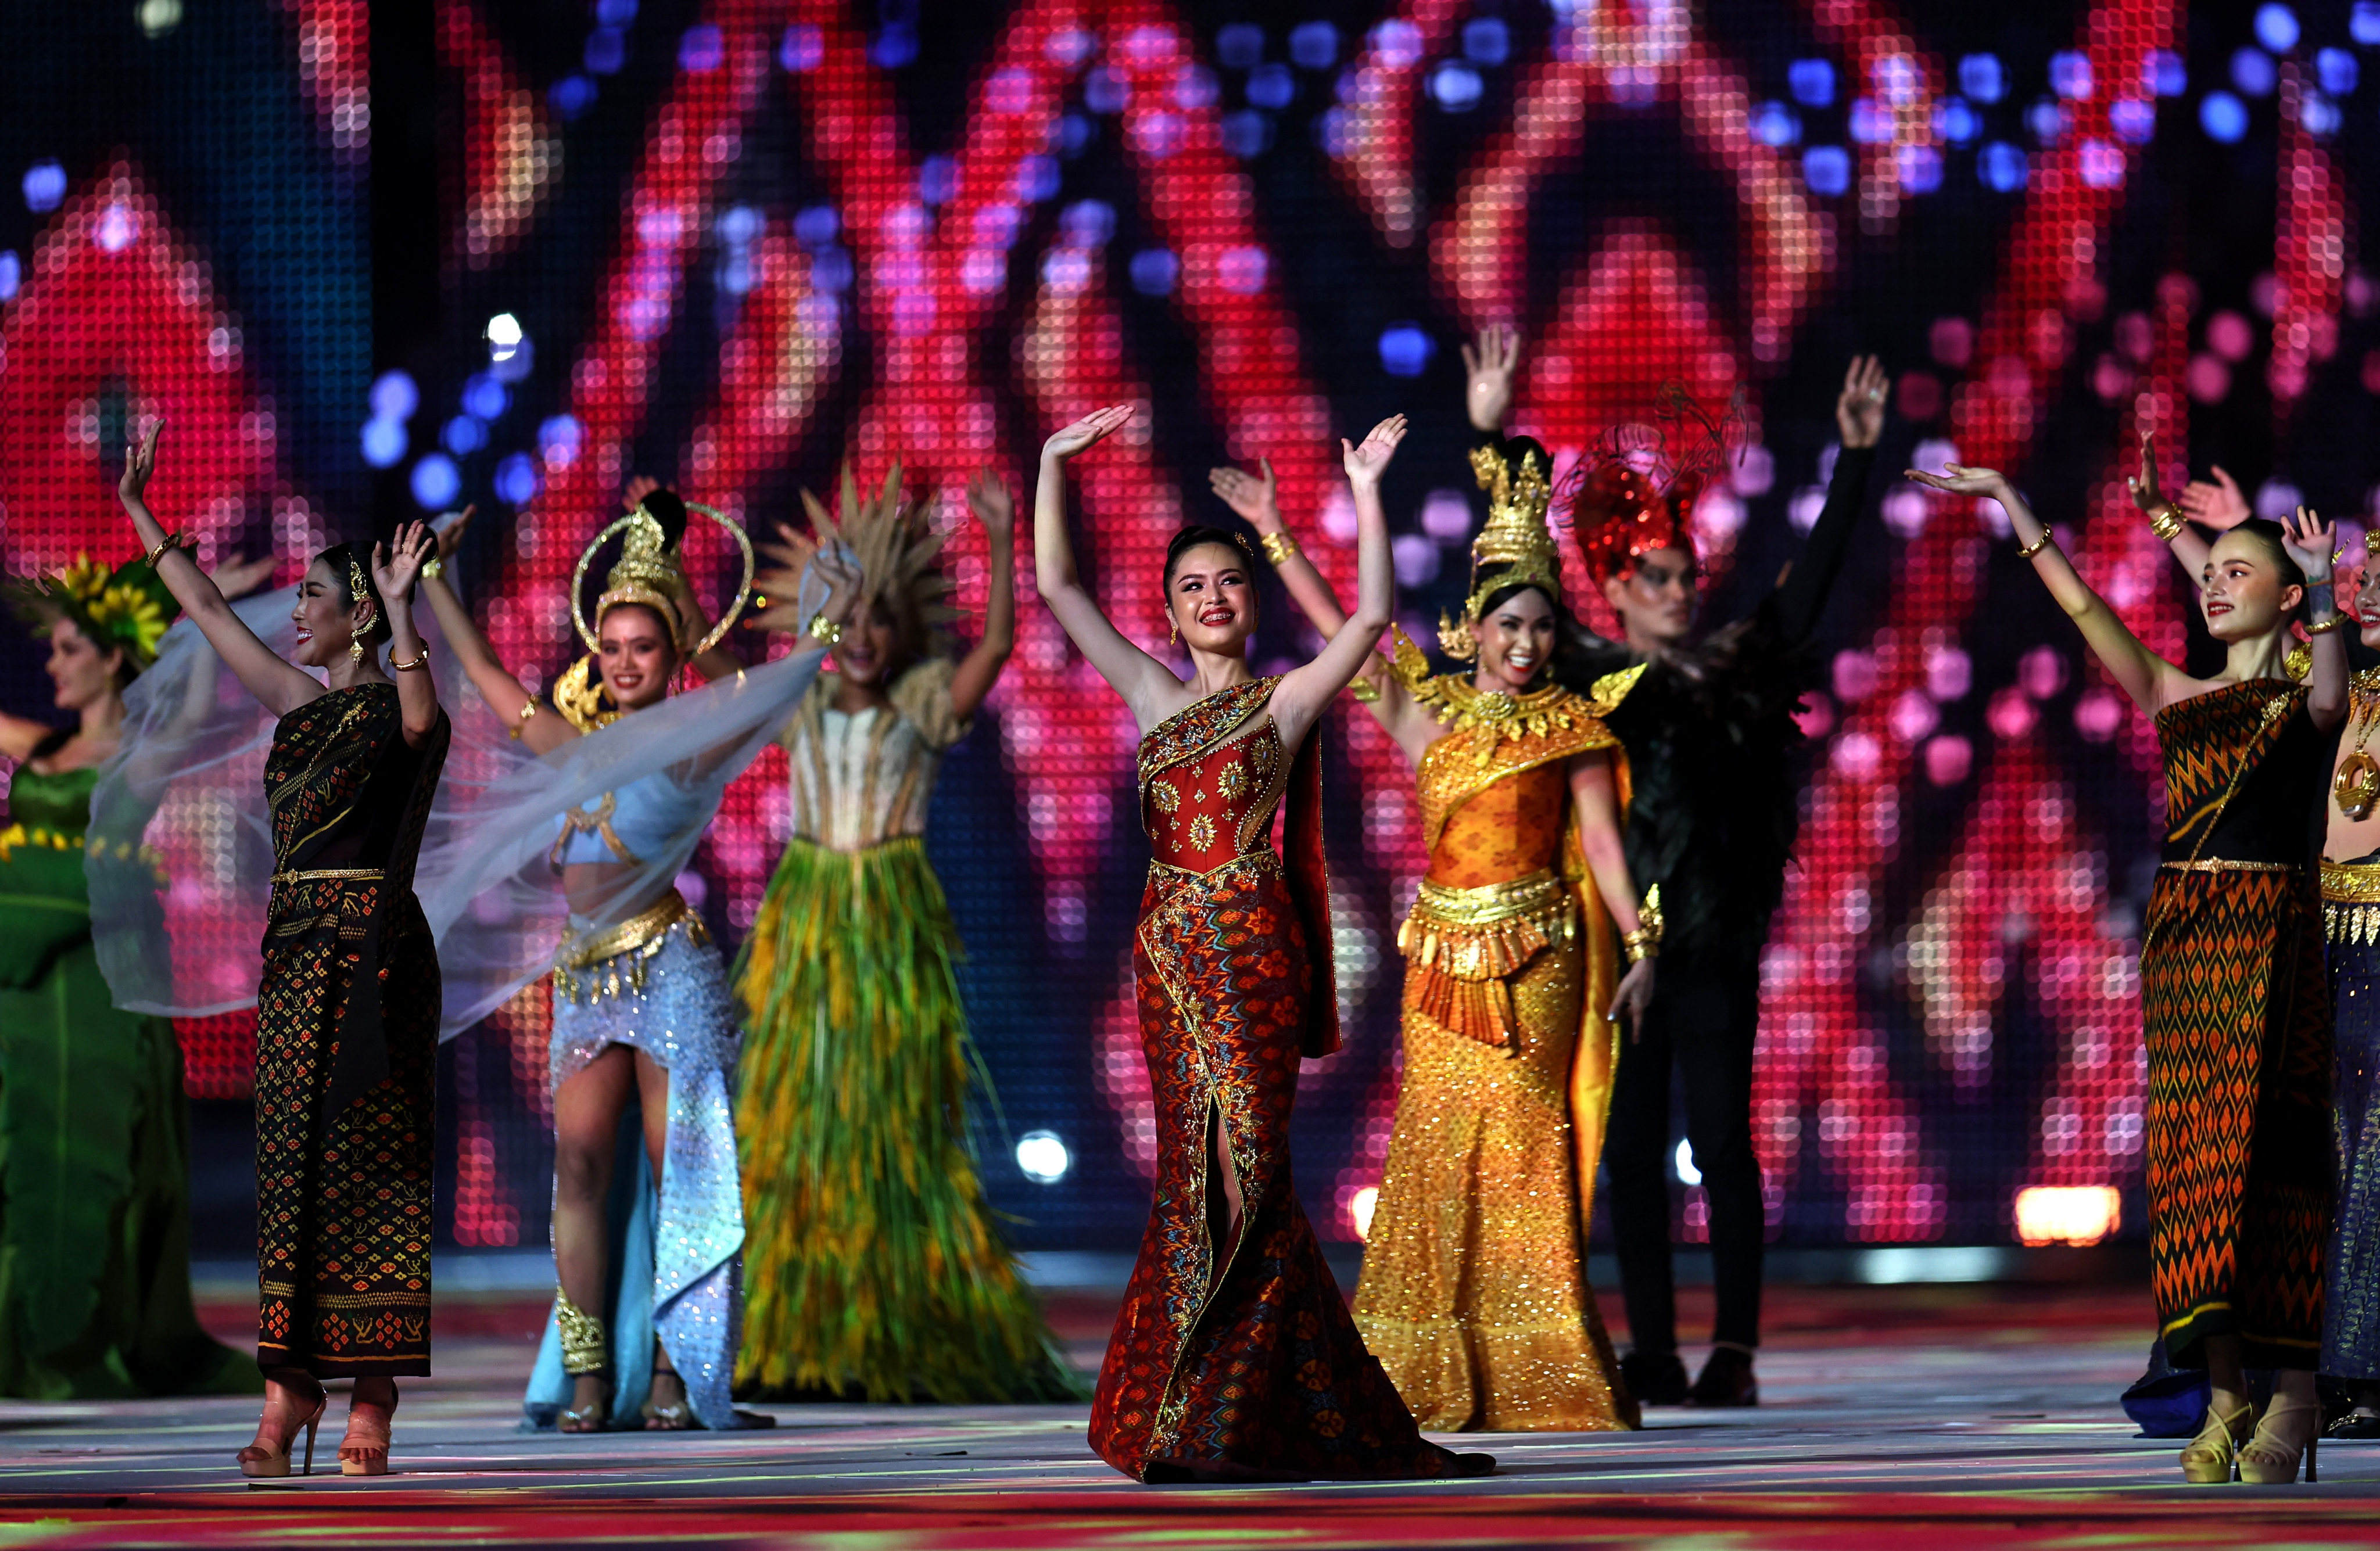 Southeast Asia Games opening ceremony at the Morodok Techo National Stadium, Phnom Penh, Cambodia. Photo: Reuters